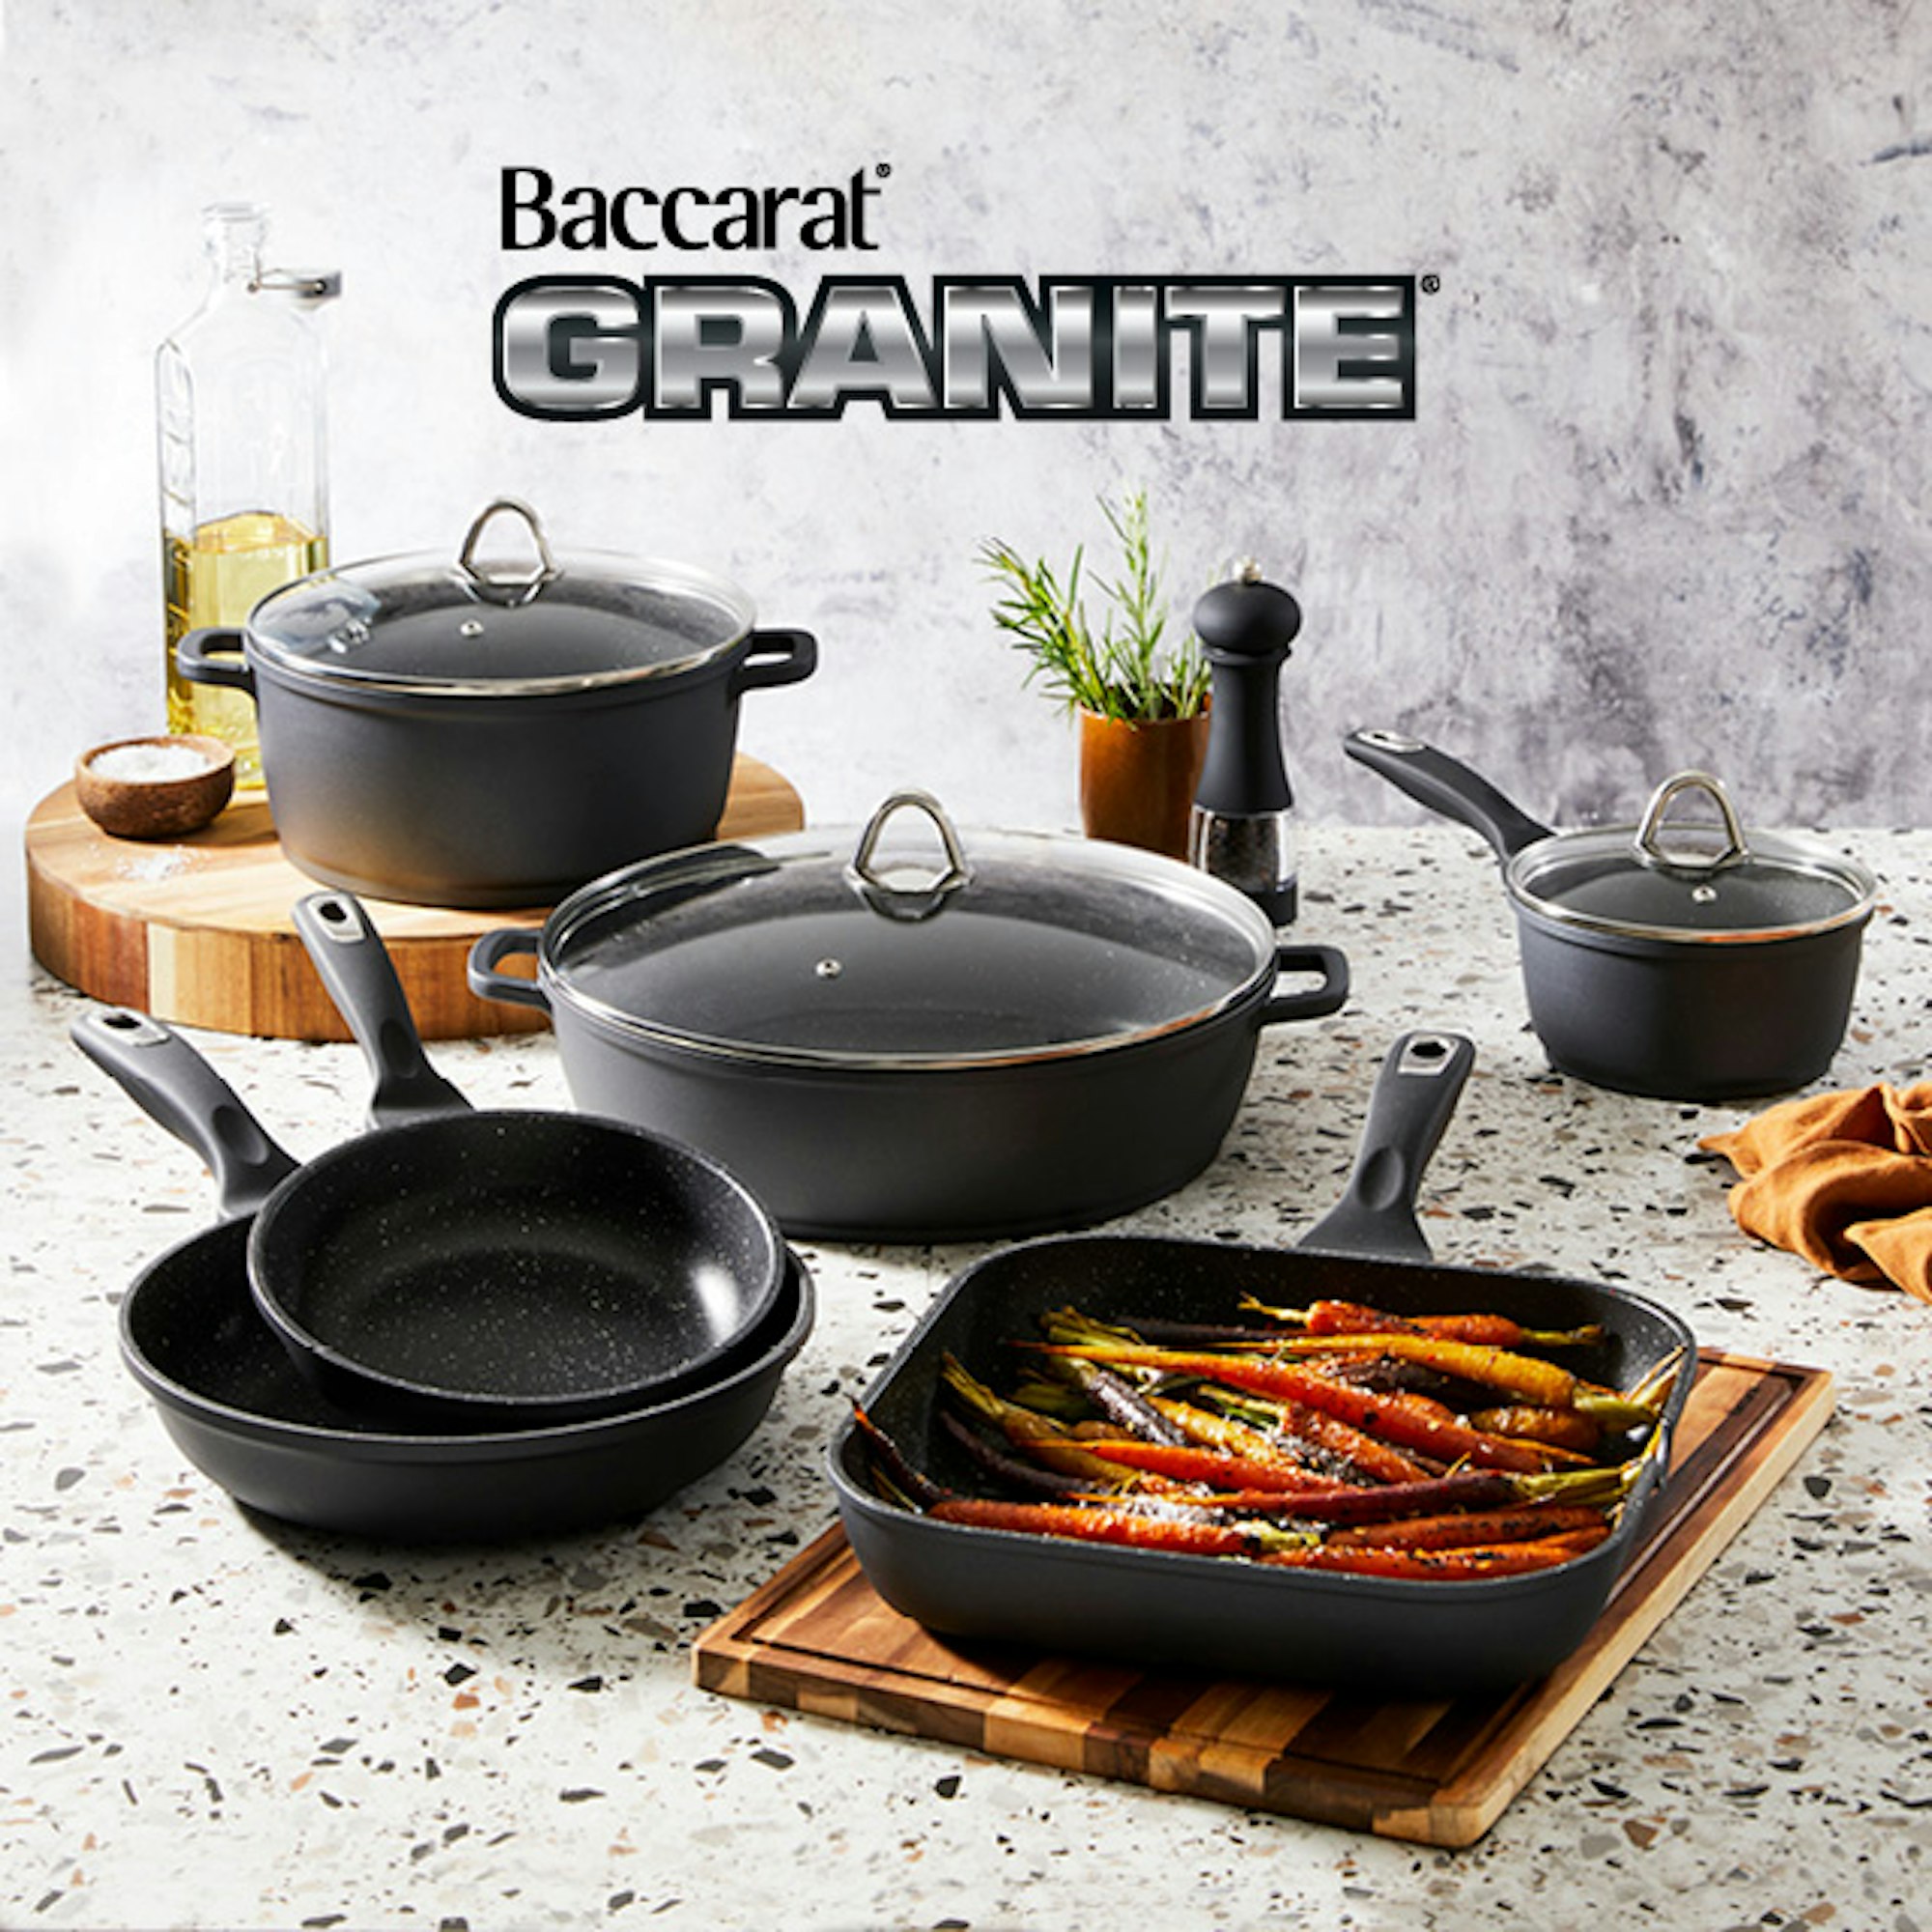 Granite Cookware